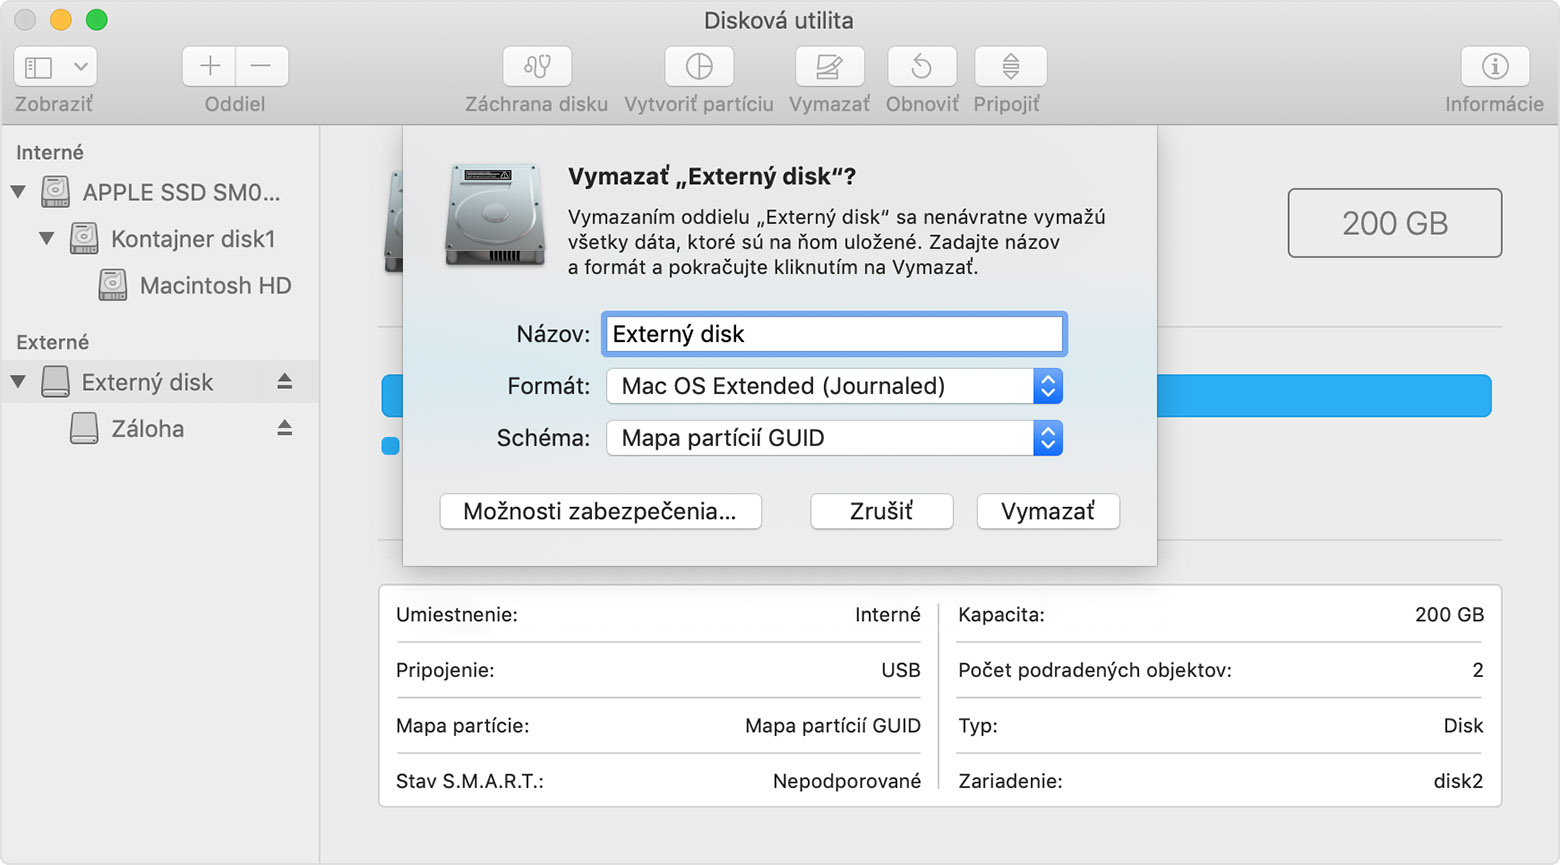 instal the last version for apple O&O DiskImage Professional 18.4.297